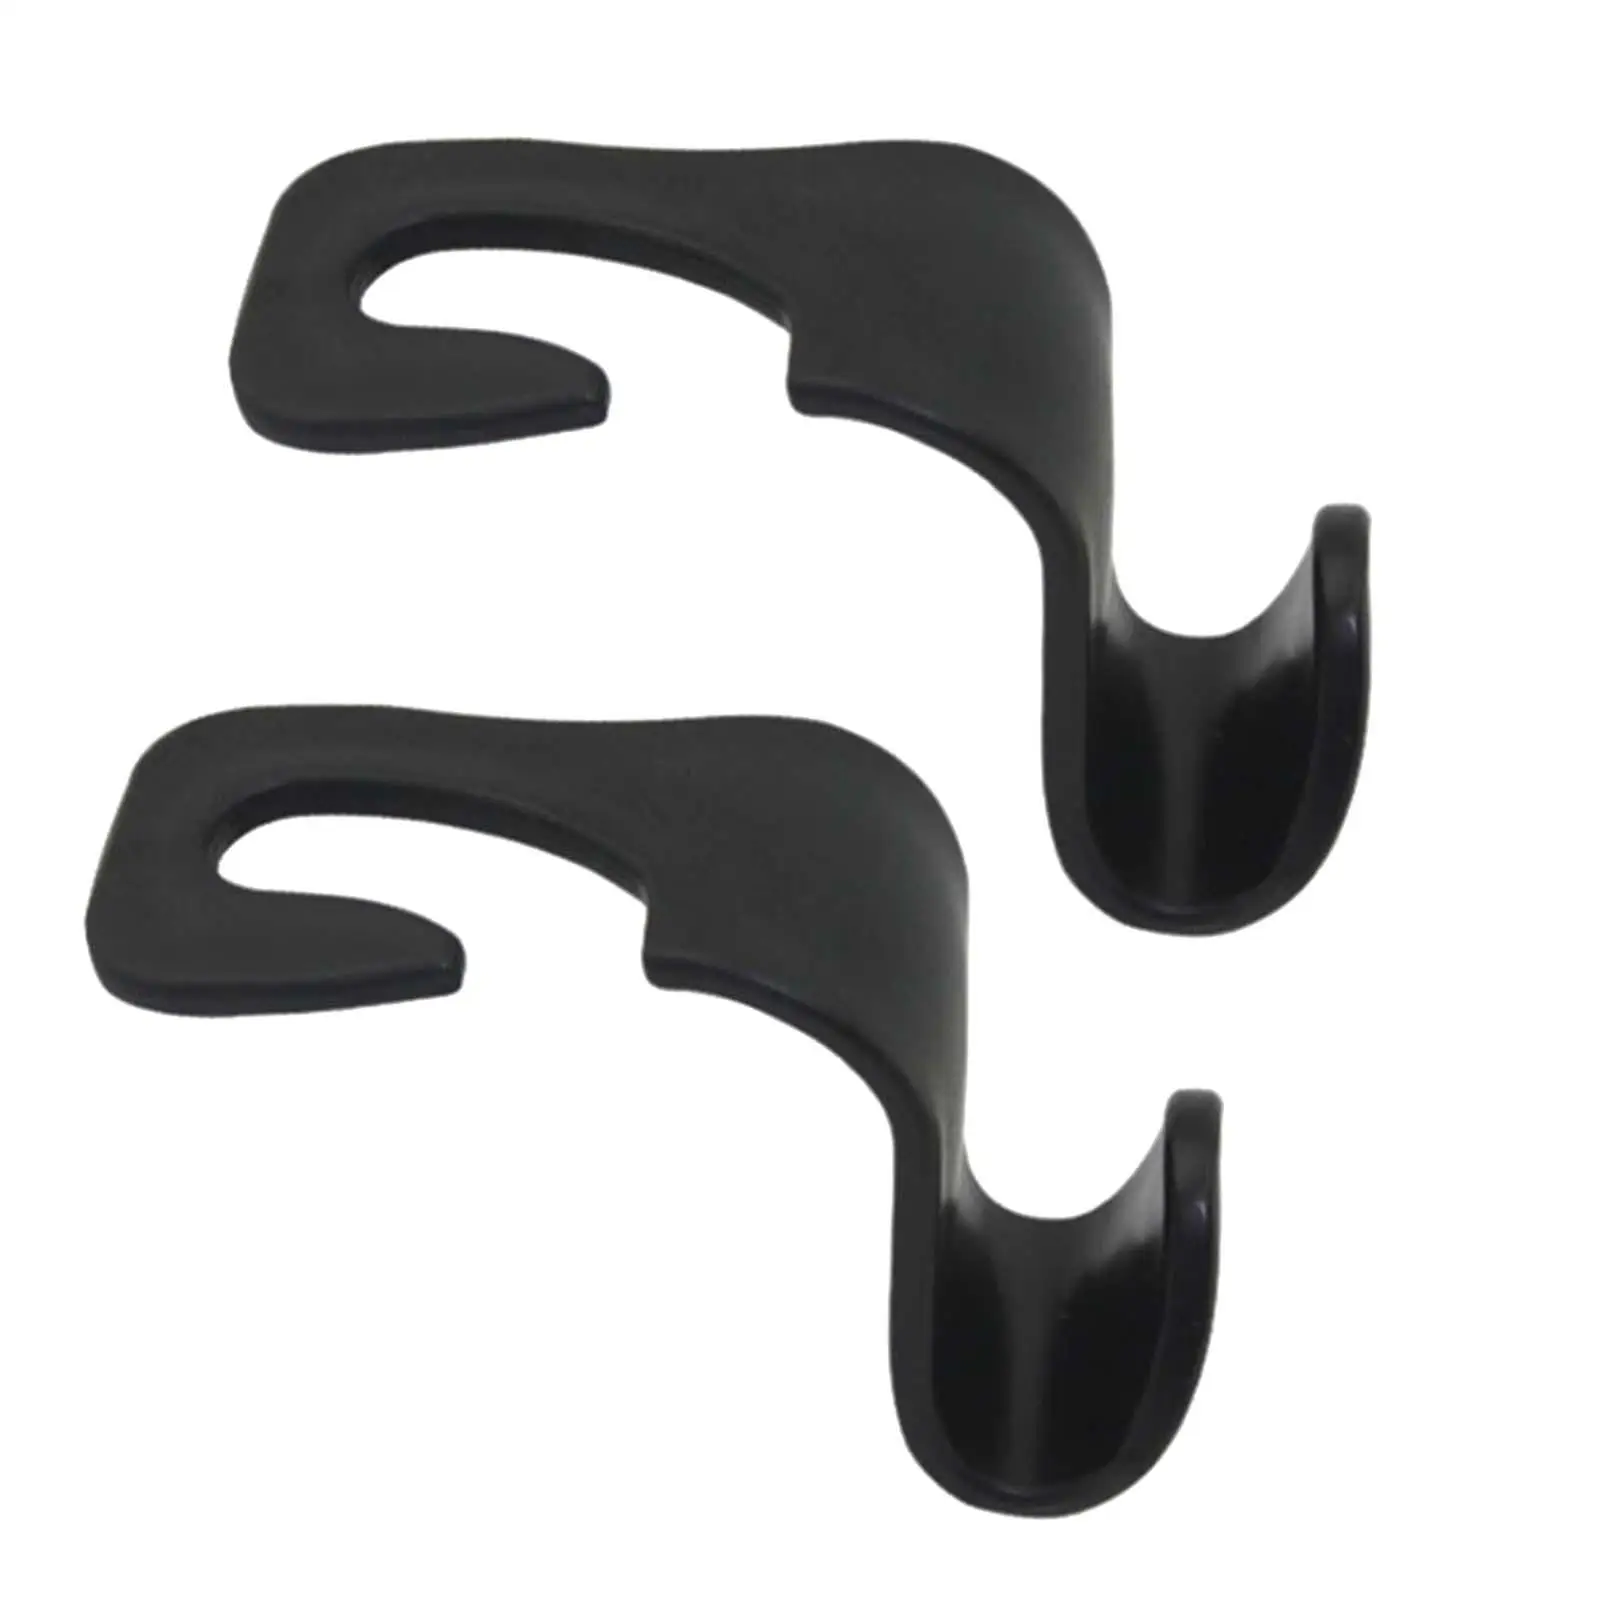 2 Pieces Car Seat Headrest Hook Holder Hook Durable Easy Installation Universal for Umbrellas Handbag Coat Grocery Purse